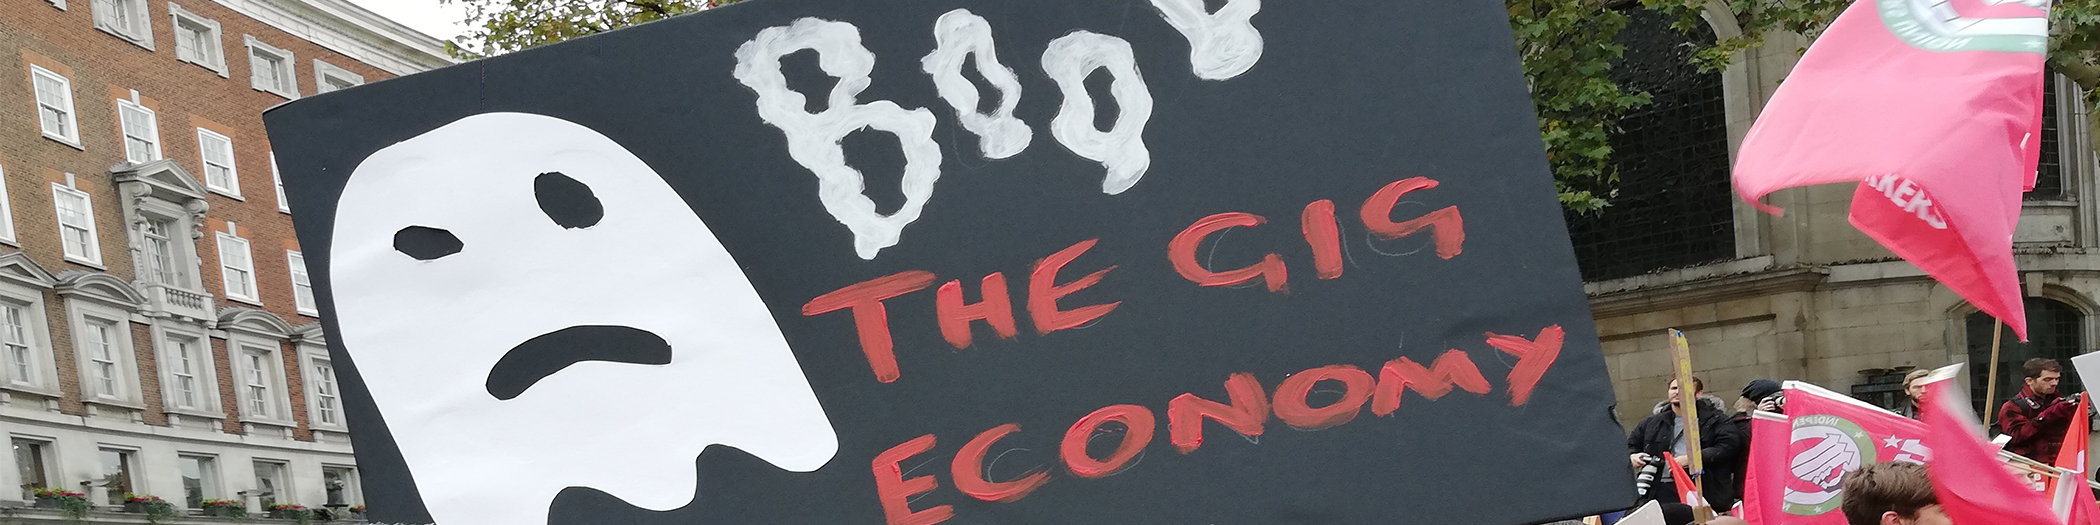 Sign saying 'Boo the gig economy'